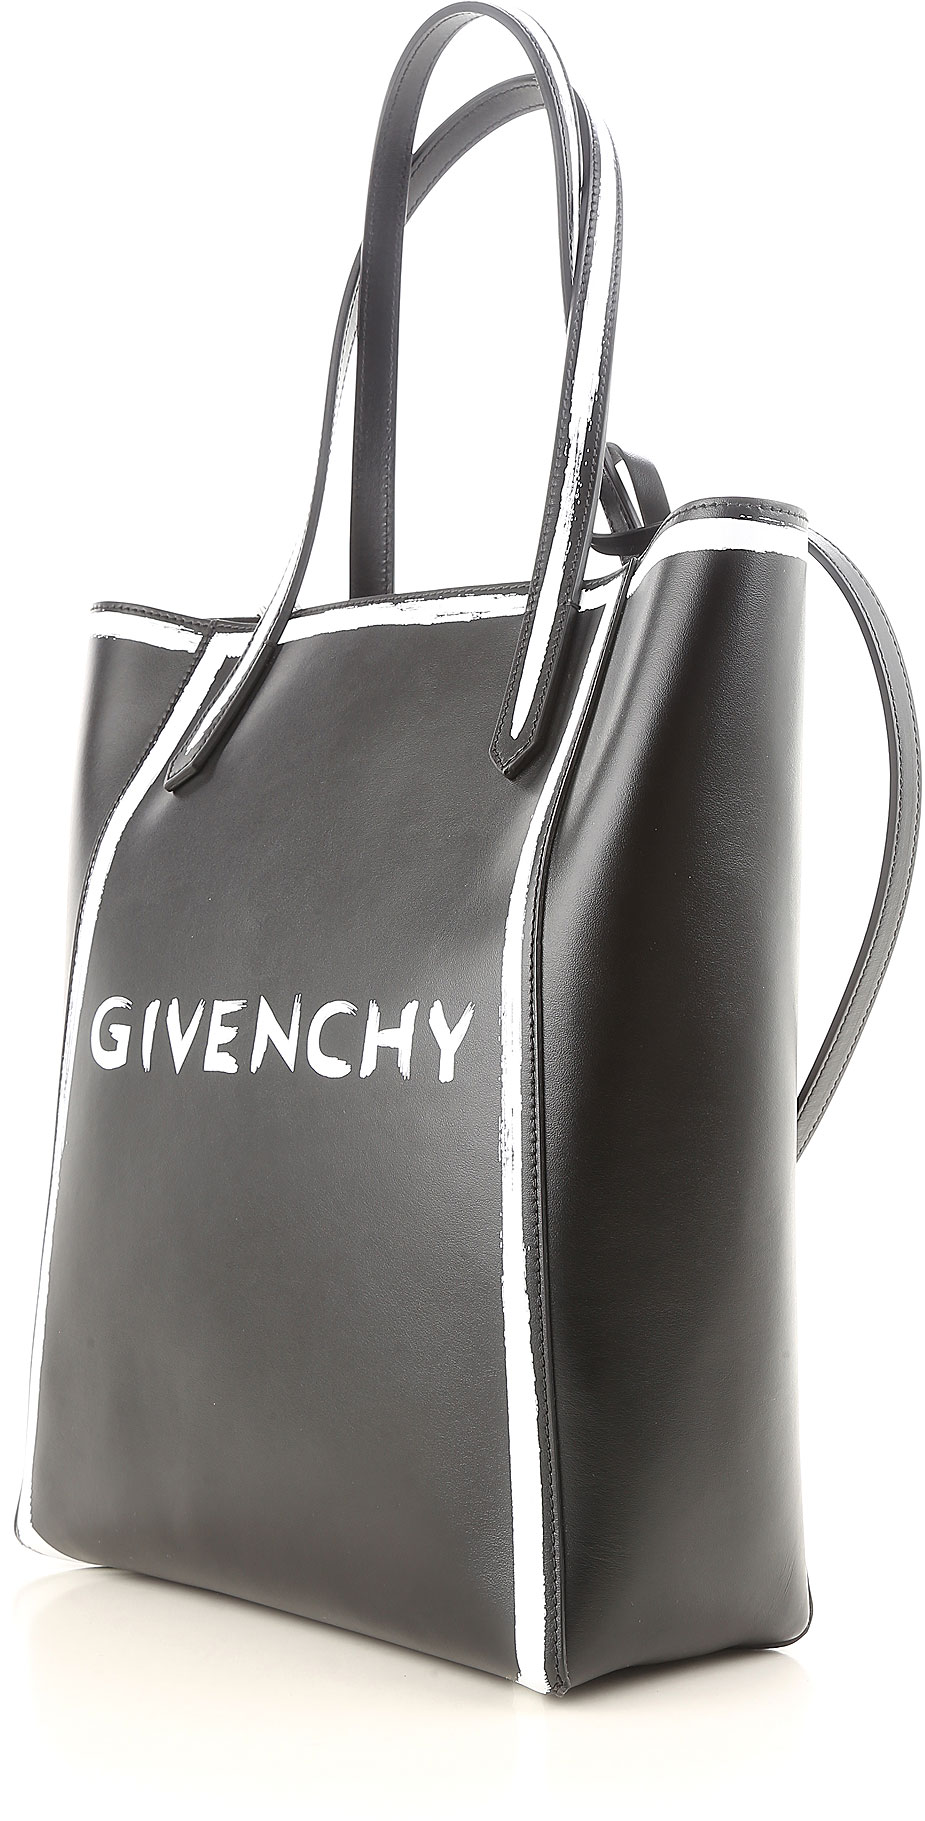 Handbags Givenchy, Style code: bb5017b01z-001-